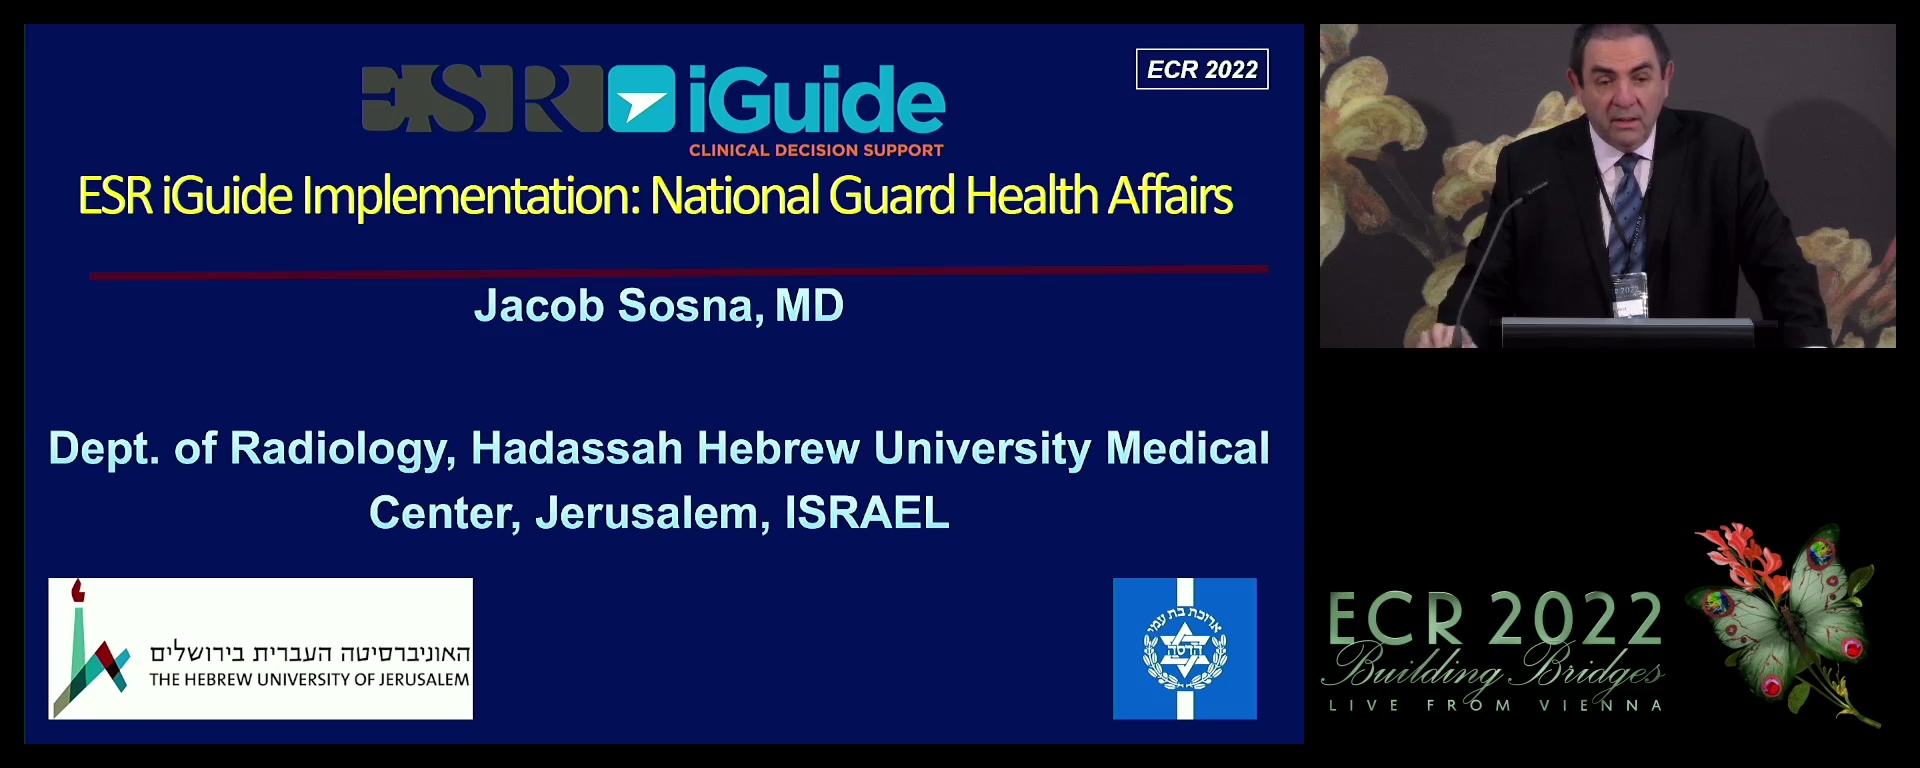 ESR iGuide implementation: National Guard Health Affairs - Jacob Sosna, Jerusalem / IL